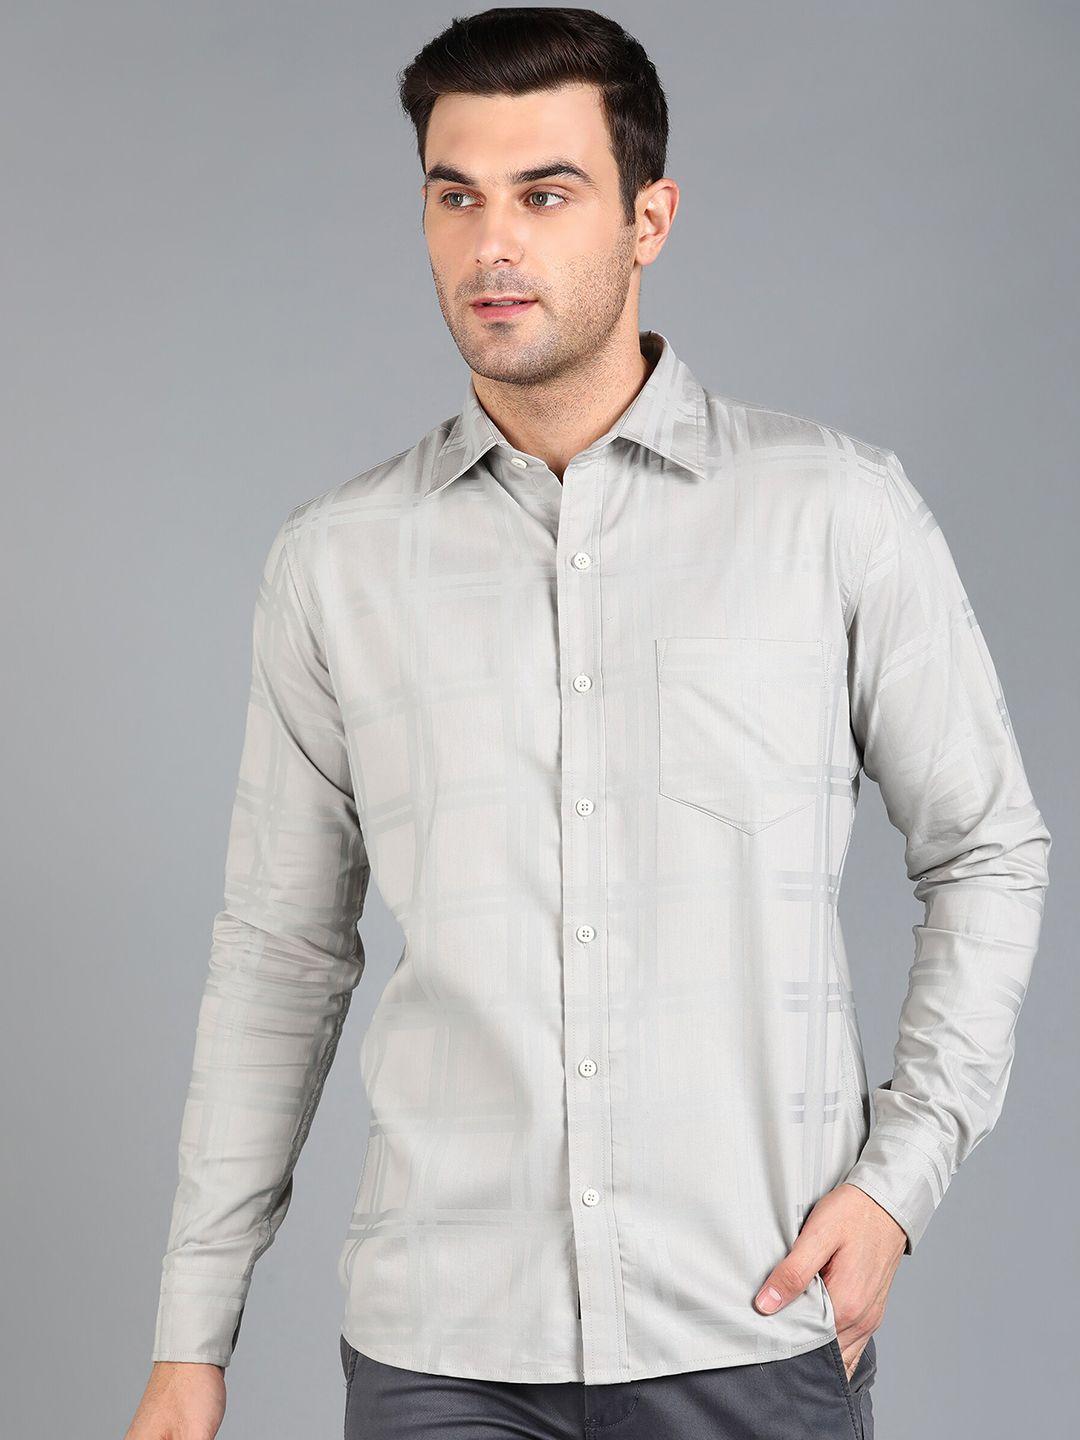 znx clothing men grey premium slim fit opaque formal shirt